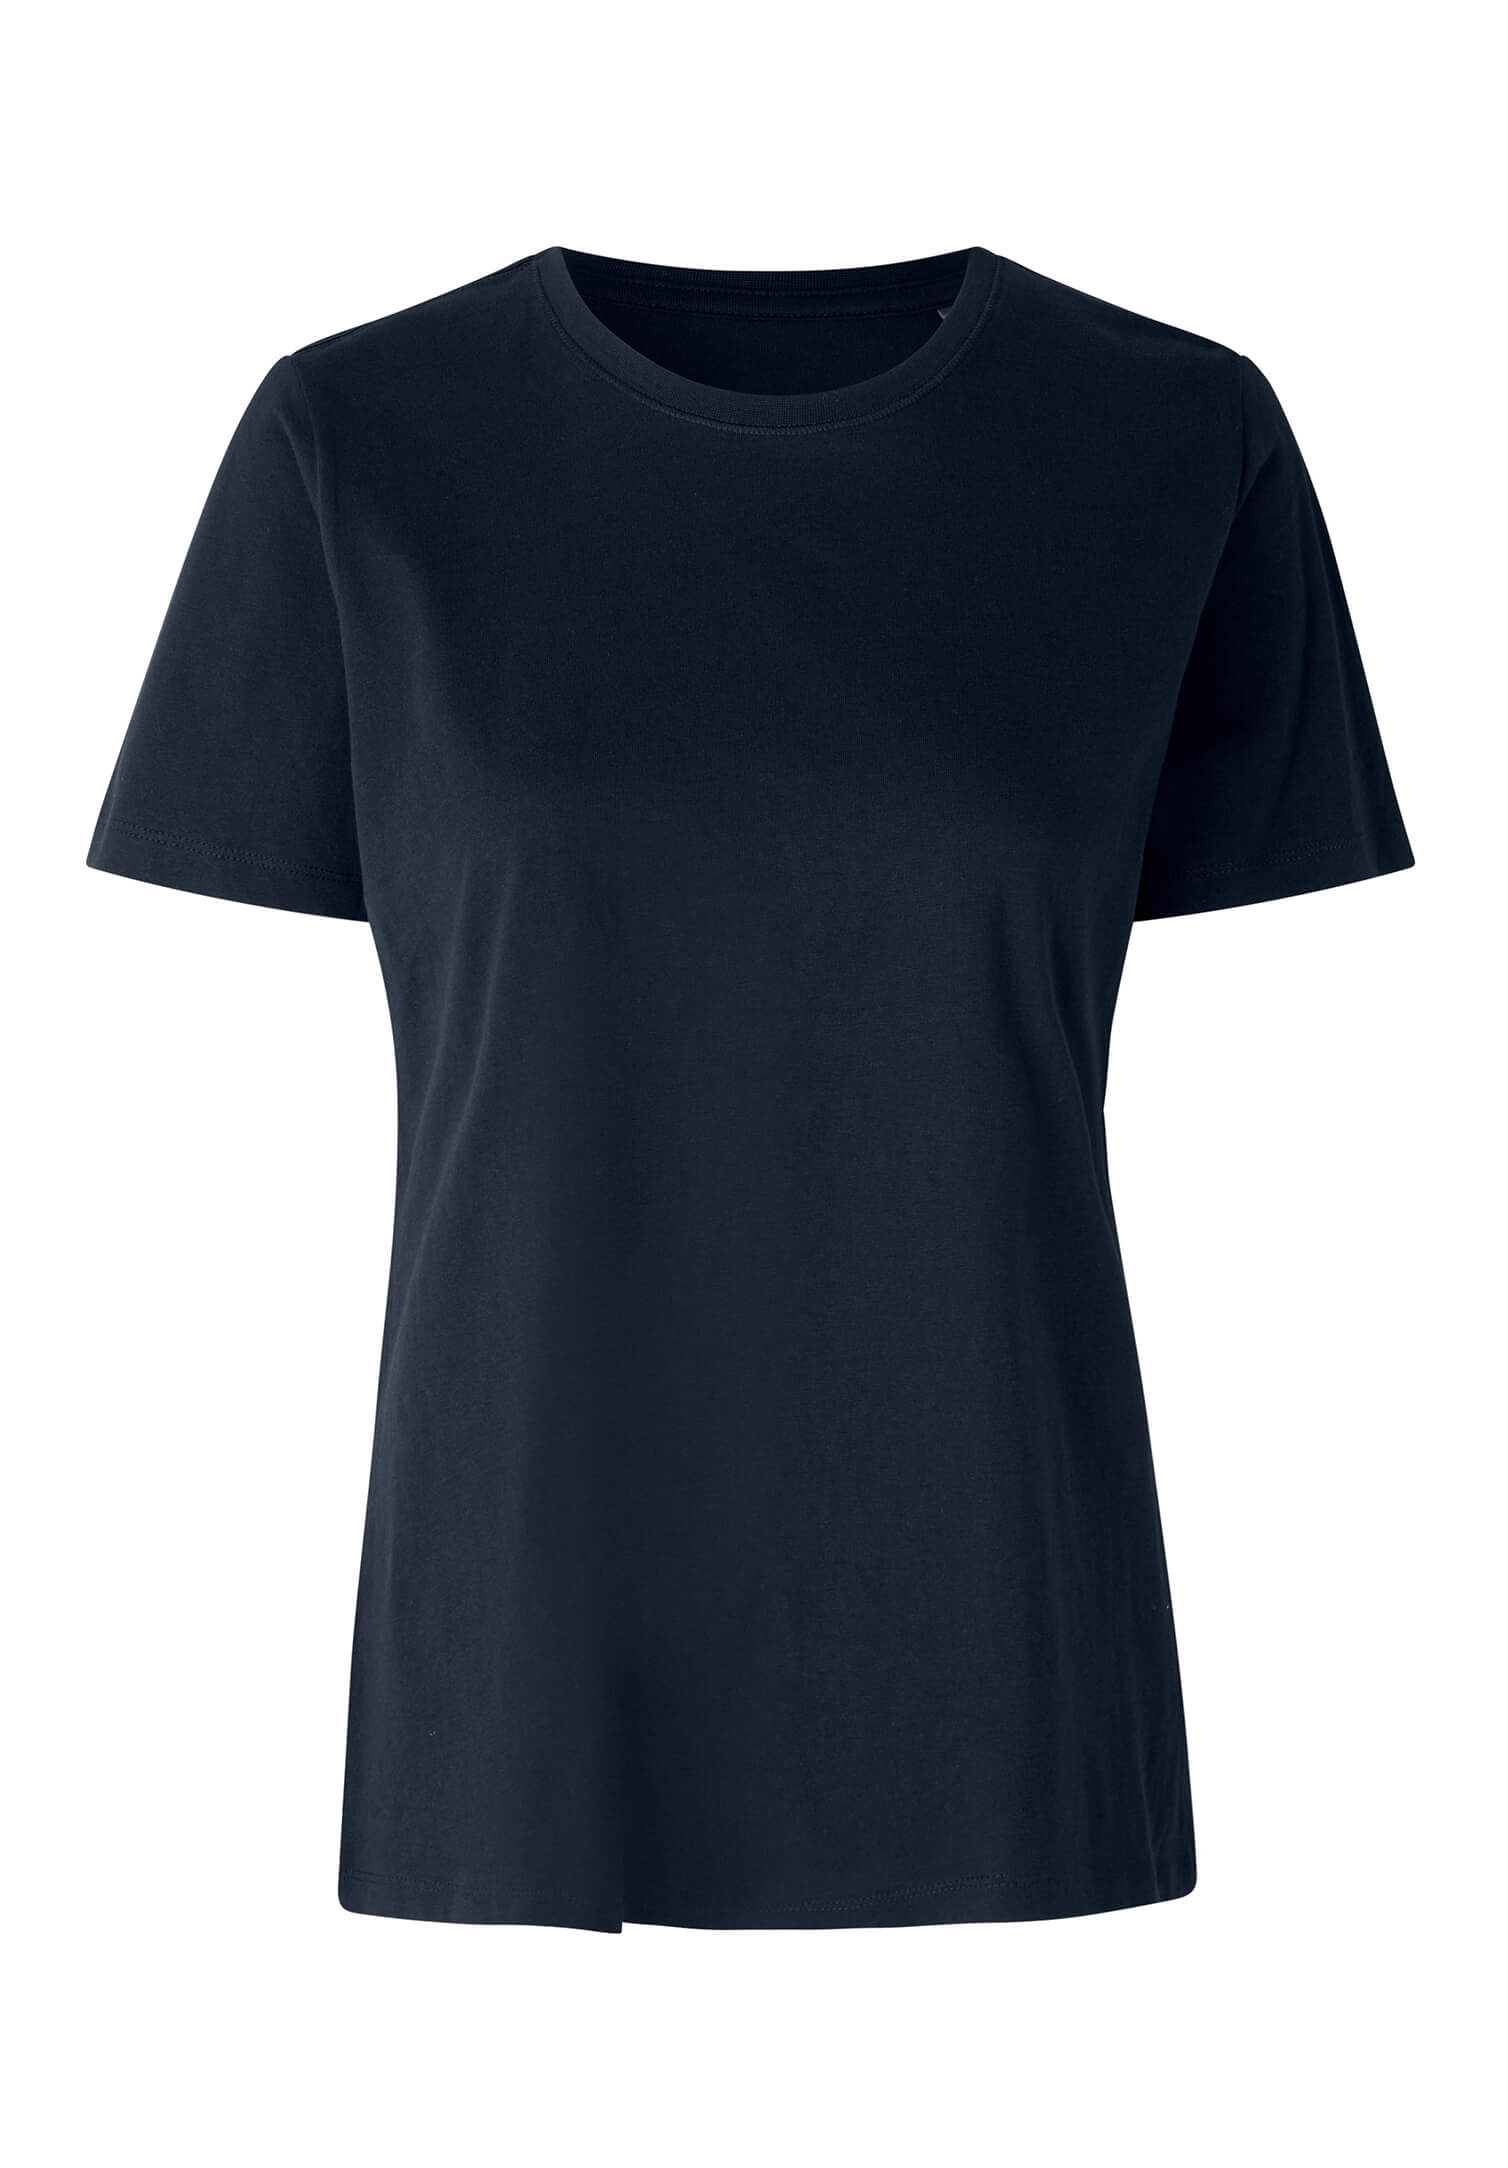 Damen Bio T-Shirt - marine - 3XL